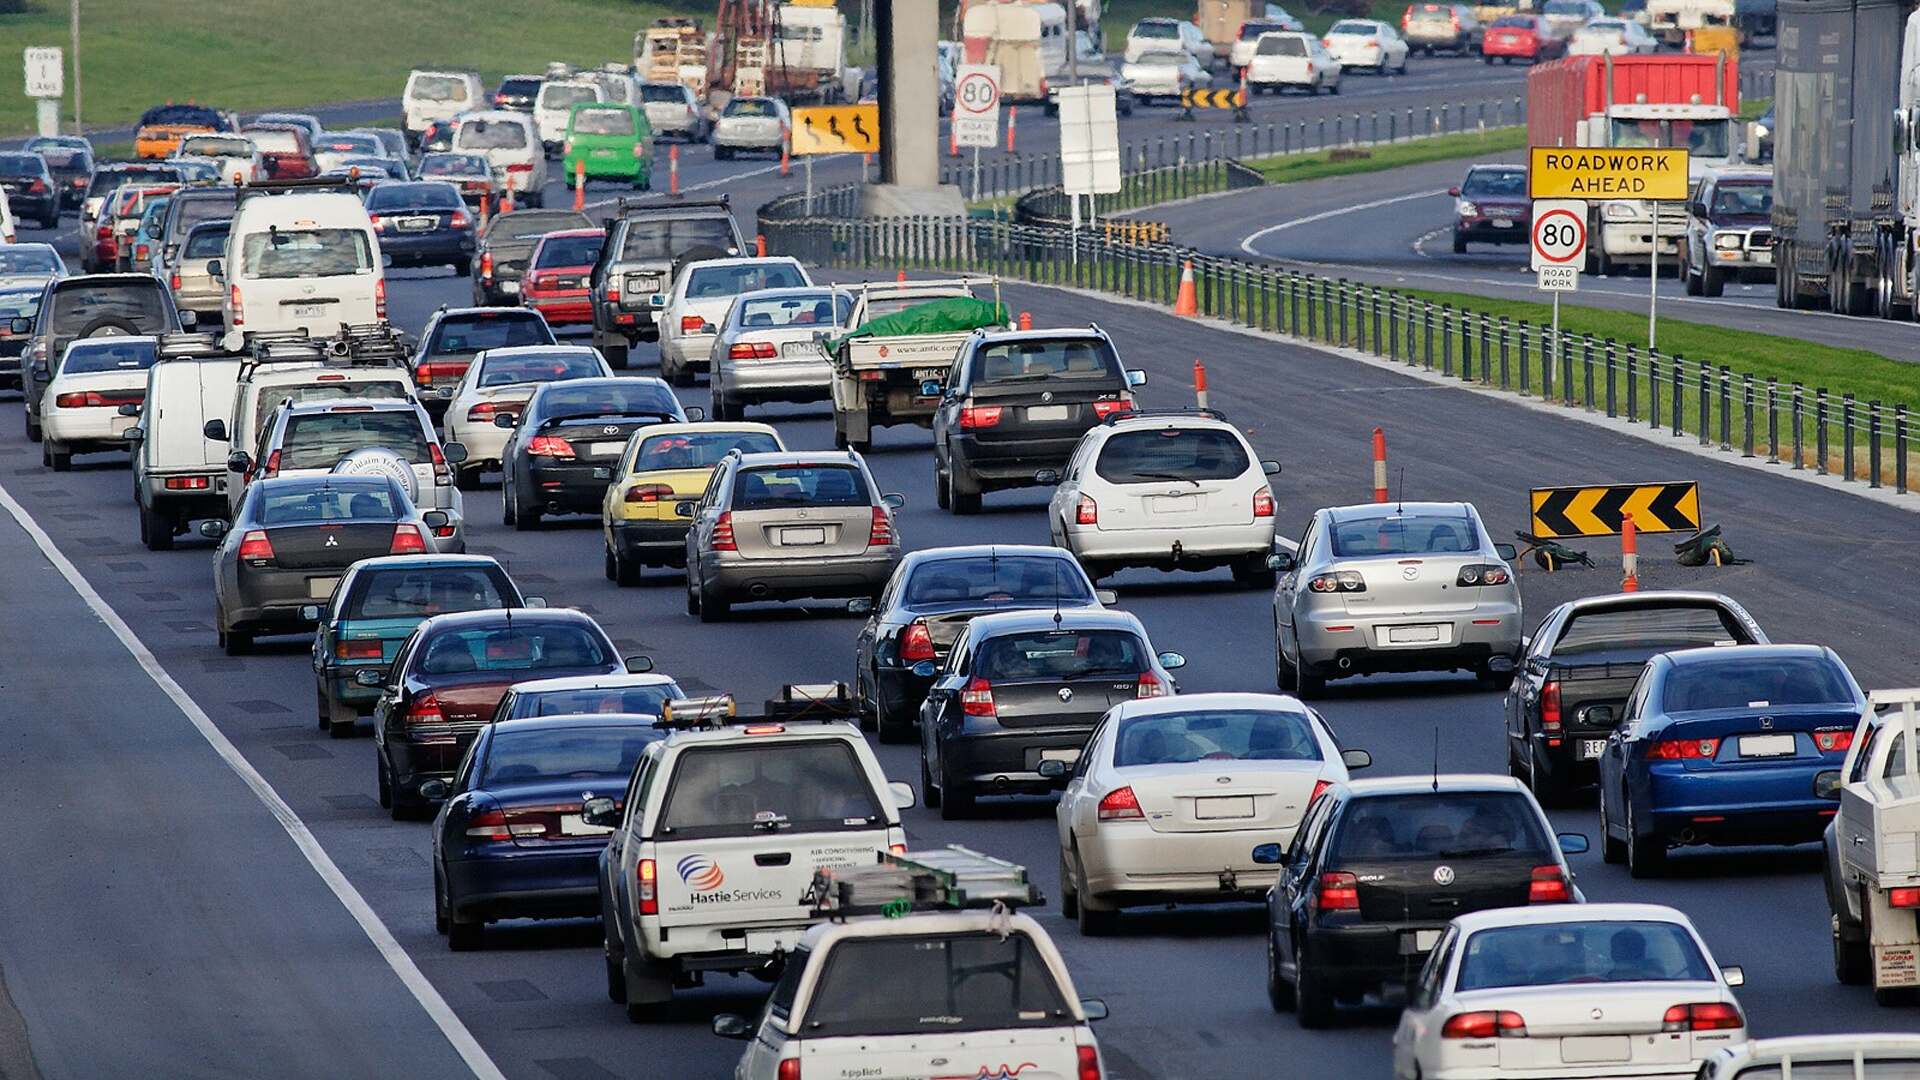 The Traffic On The Monash Freeway In Melbourne, Australia During Peak Hours (Credits Wikipedia)